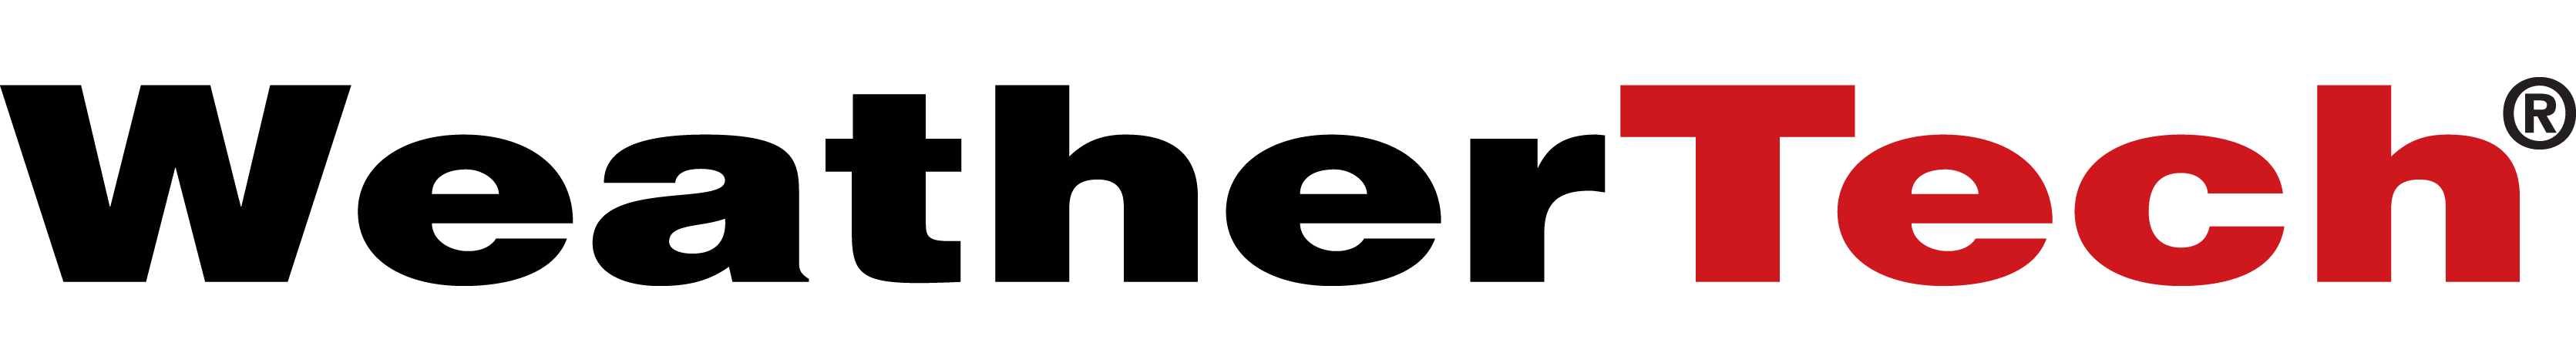 WeatherTech Logo blk-red